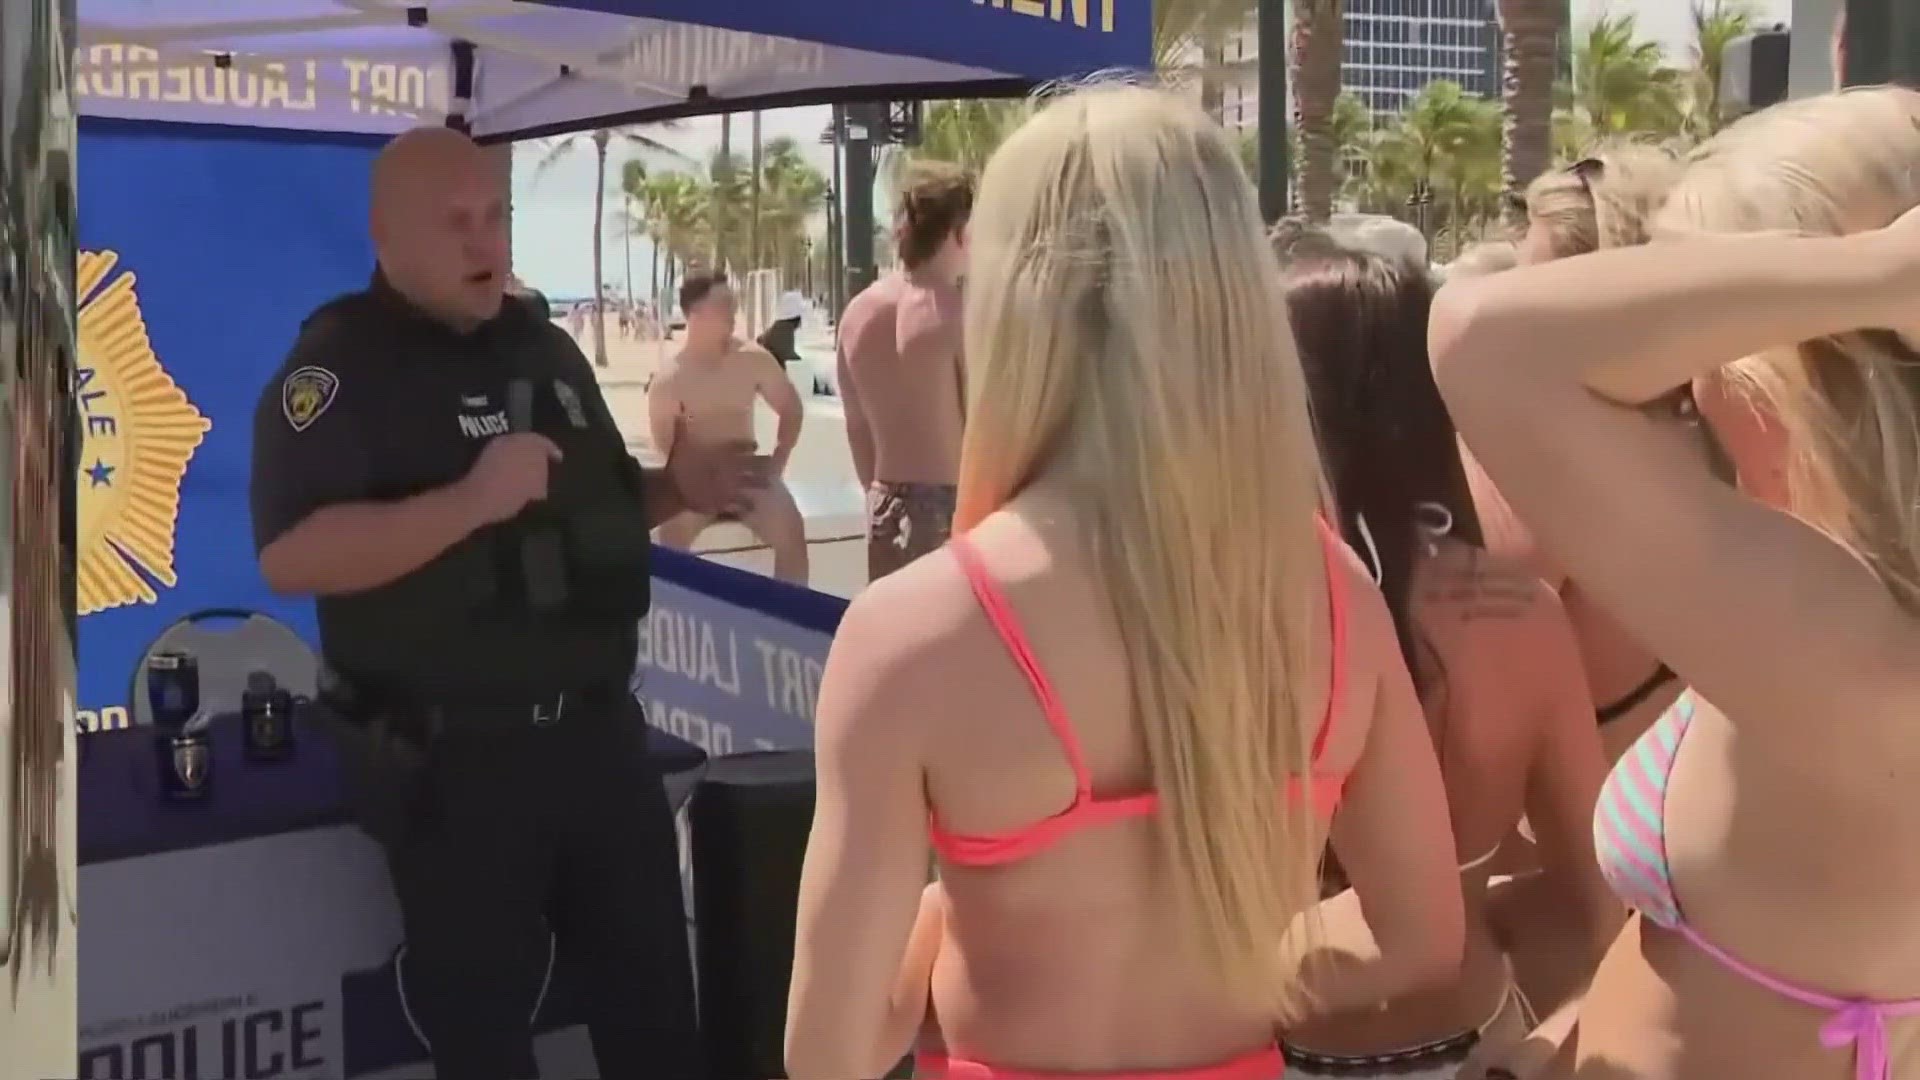 Sing-a-longs, trivia games, Fort Lauderdale police having fun with spring breakers